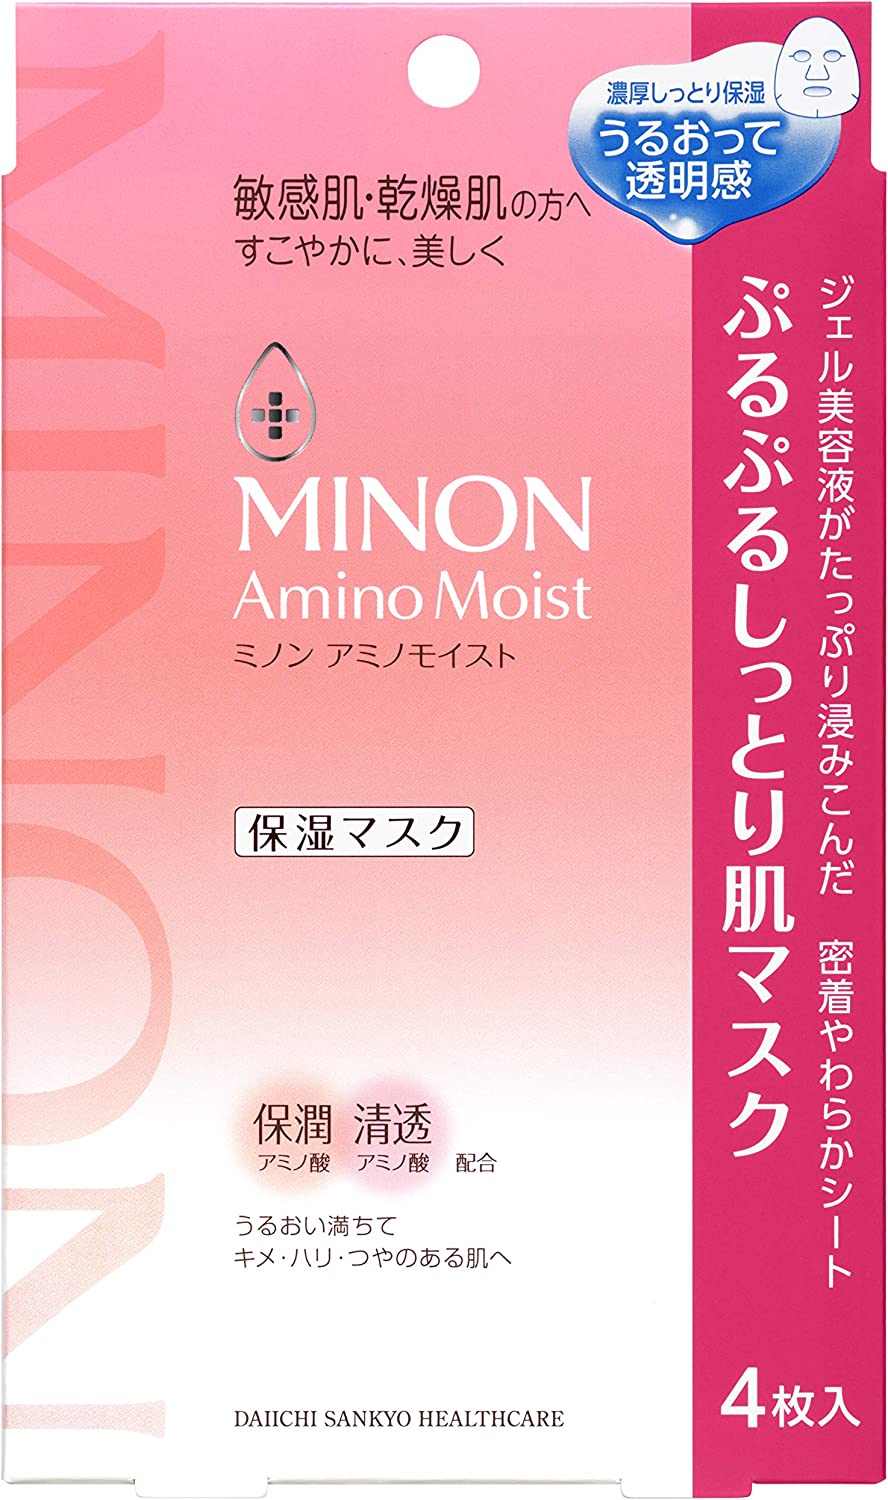 MINON Amino Moist Mask 22ml * 4sheets